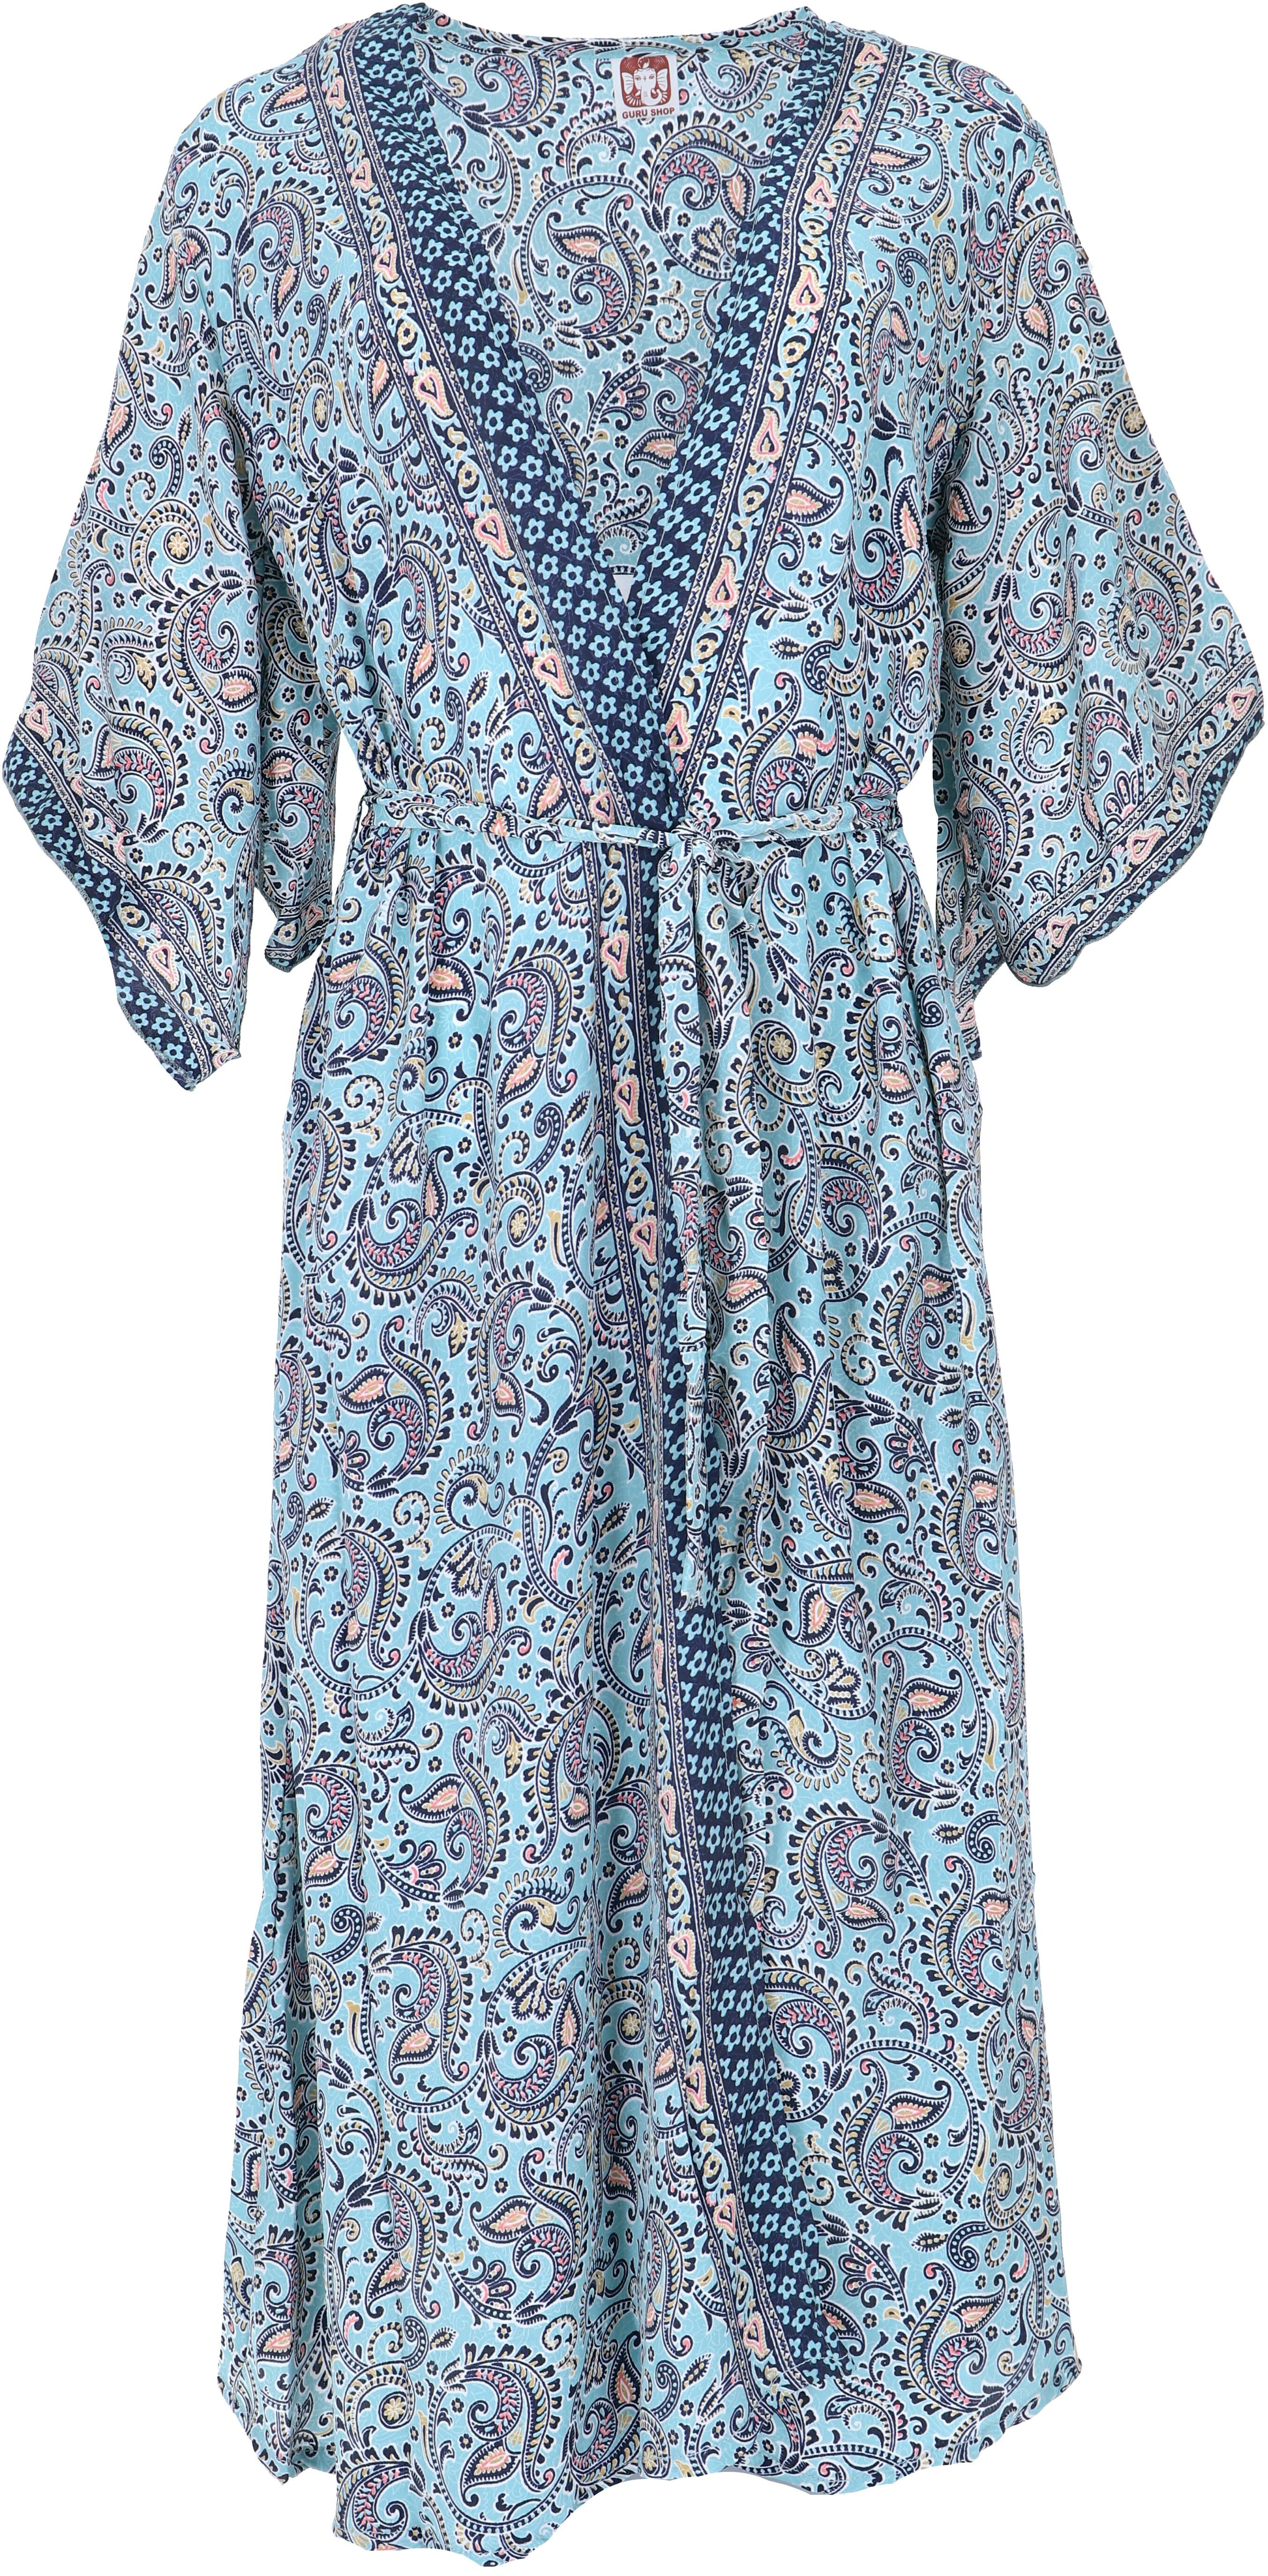 Bekleidung Kimono Mantel,.., Kimono blau alternative Langer Kimono im Guru-Shop Japan Style,